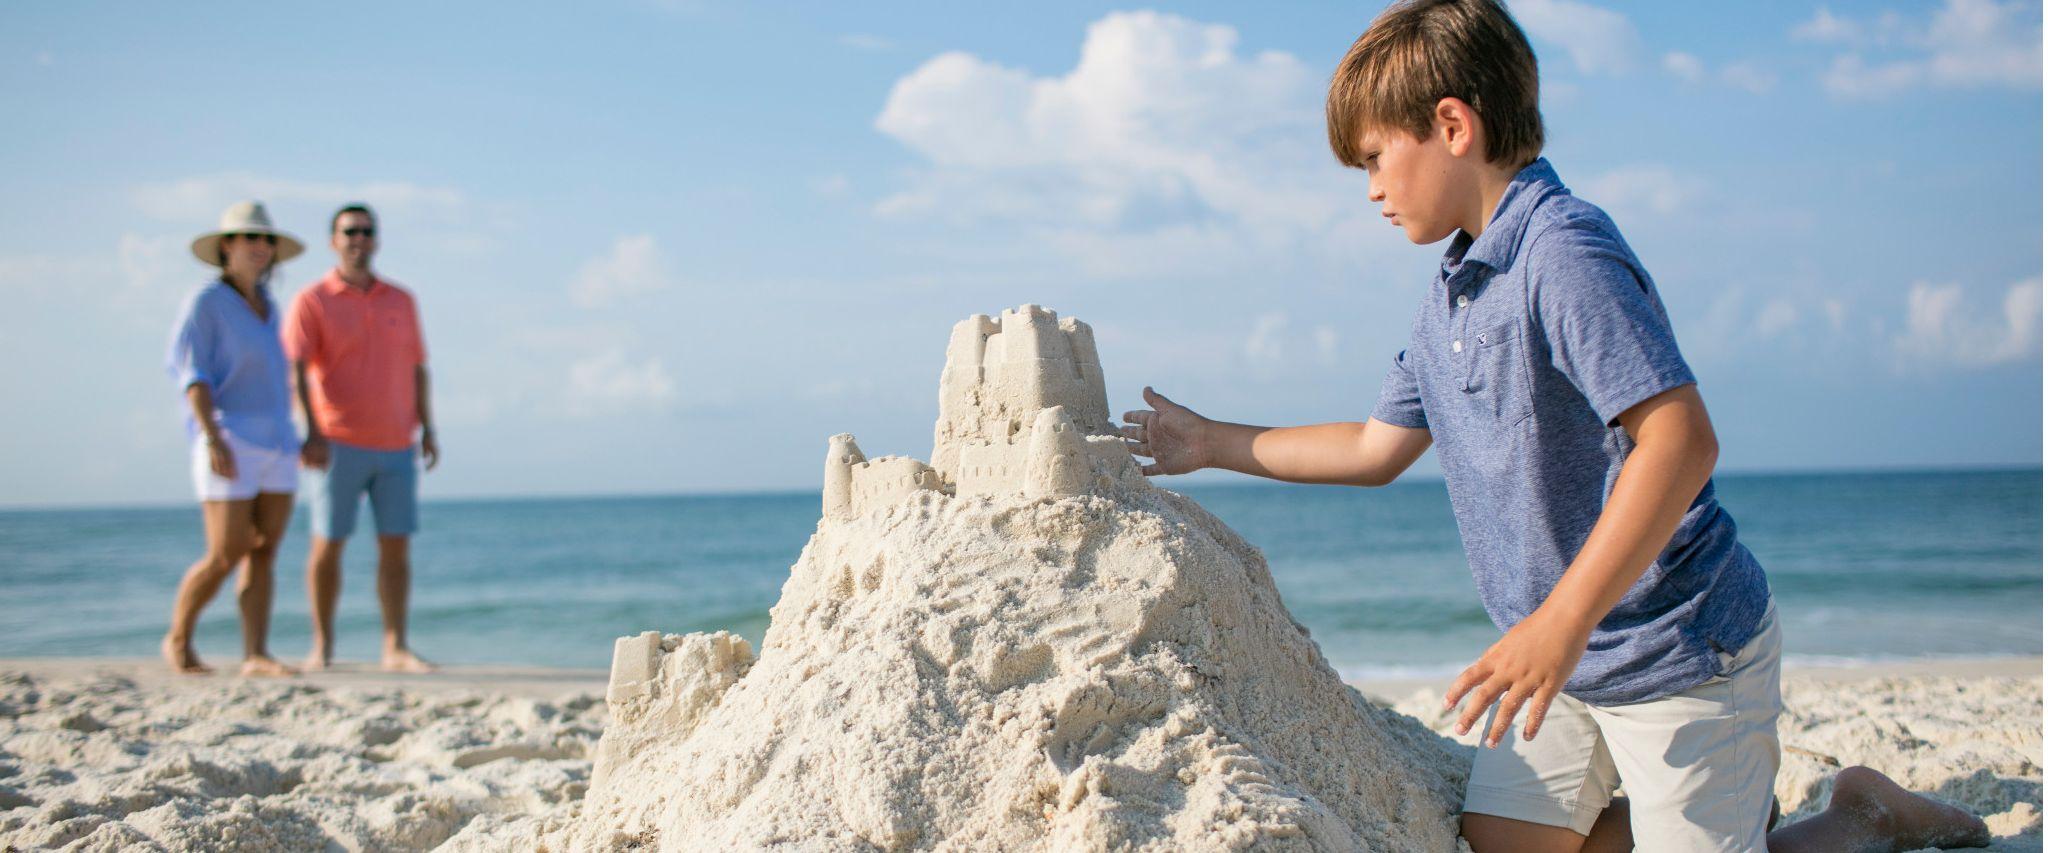 boy building sandcastle in orange beach